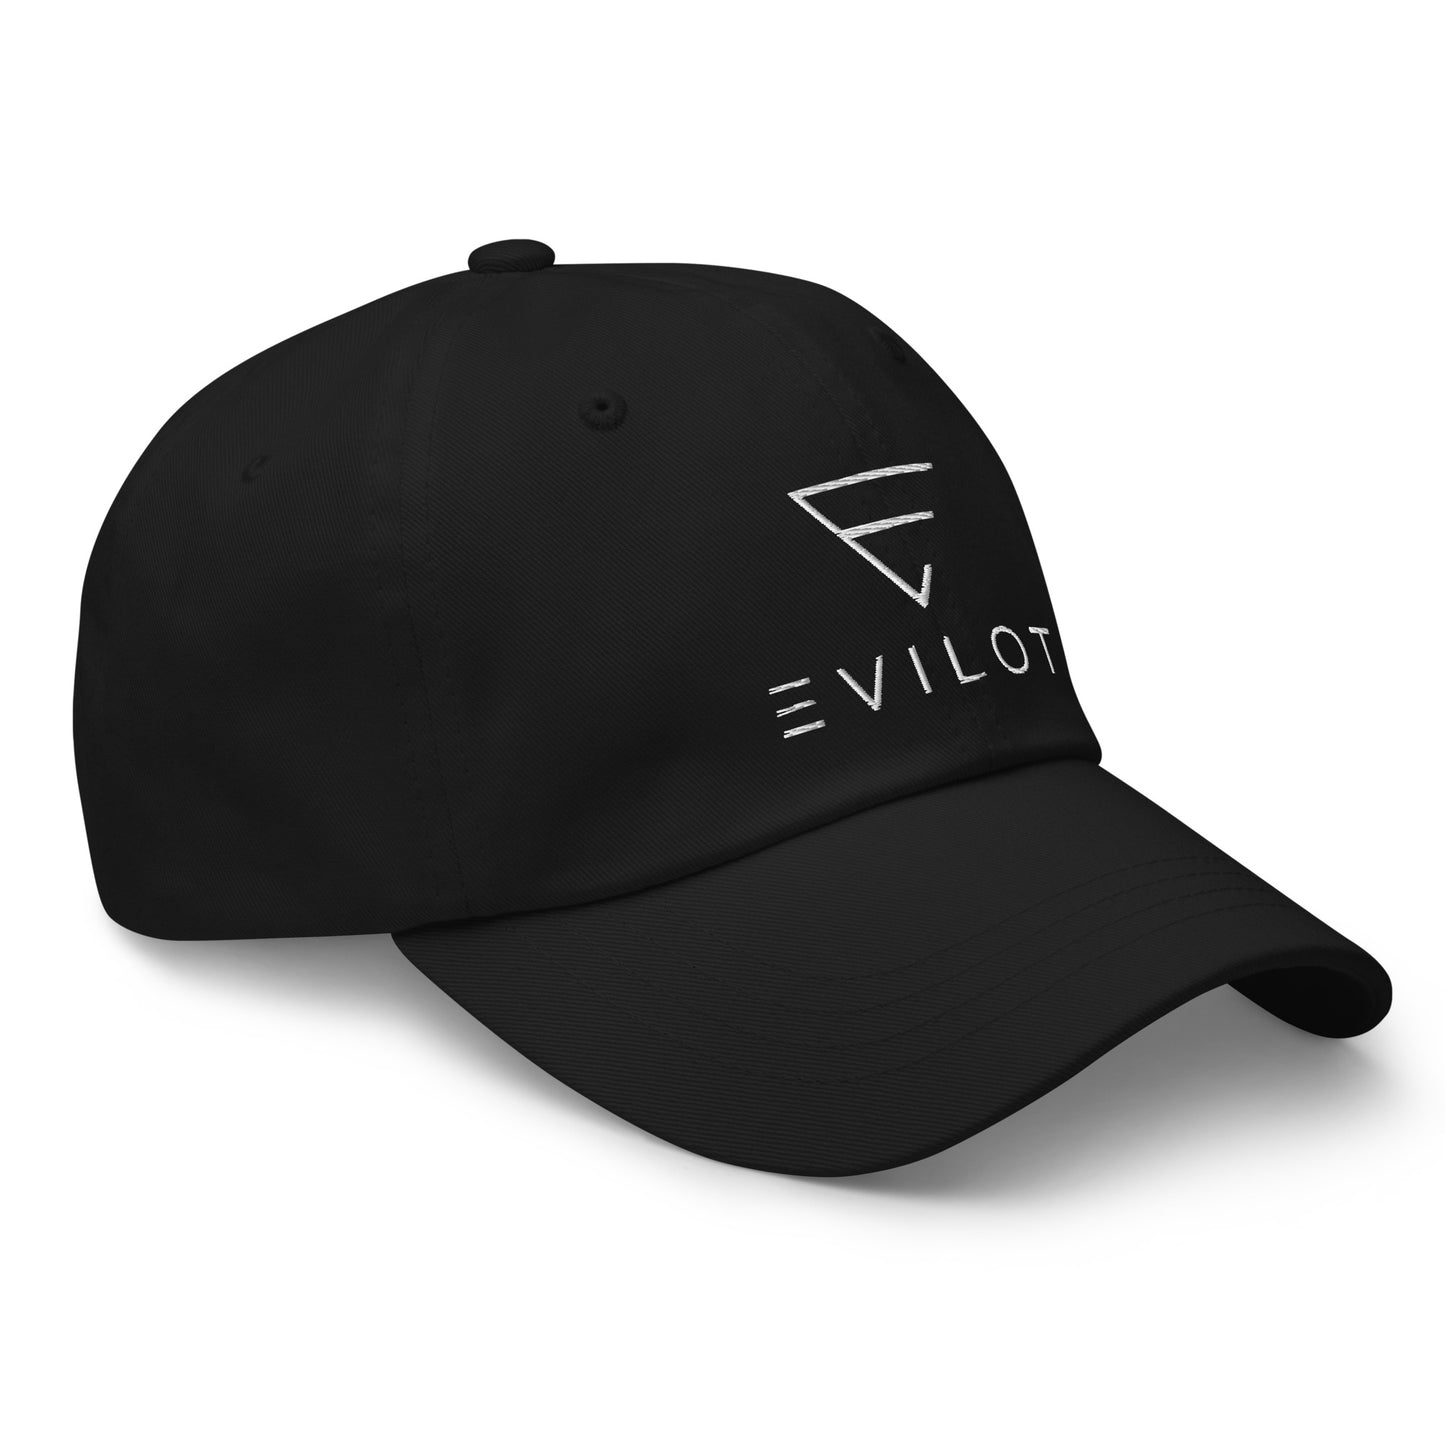 Evilot Signature Hat - Black